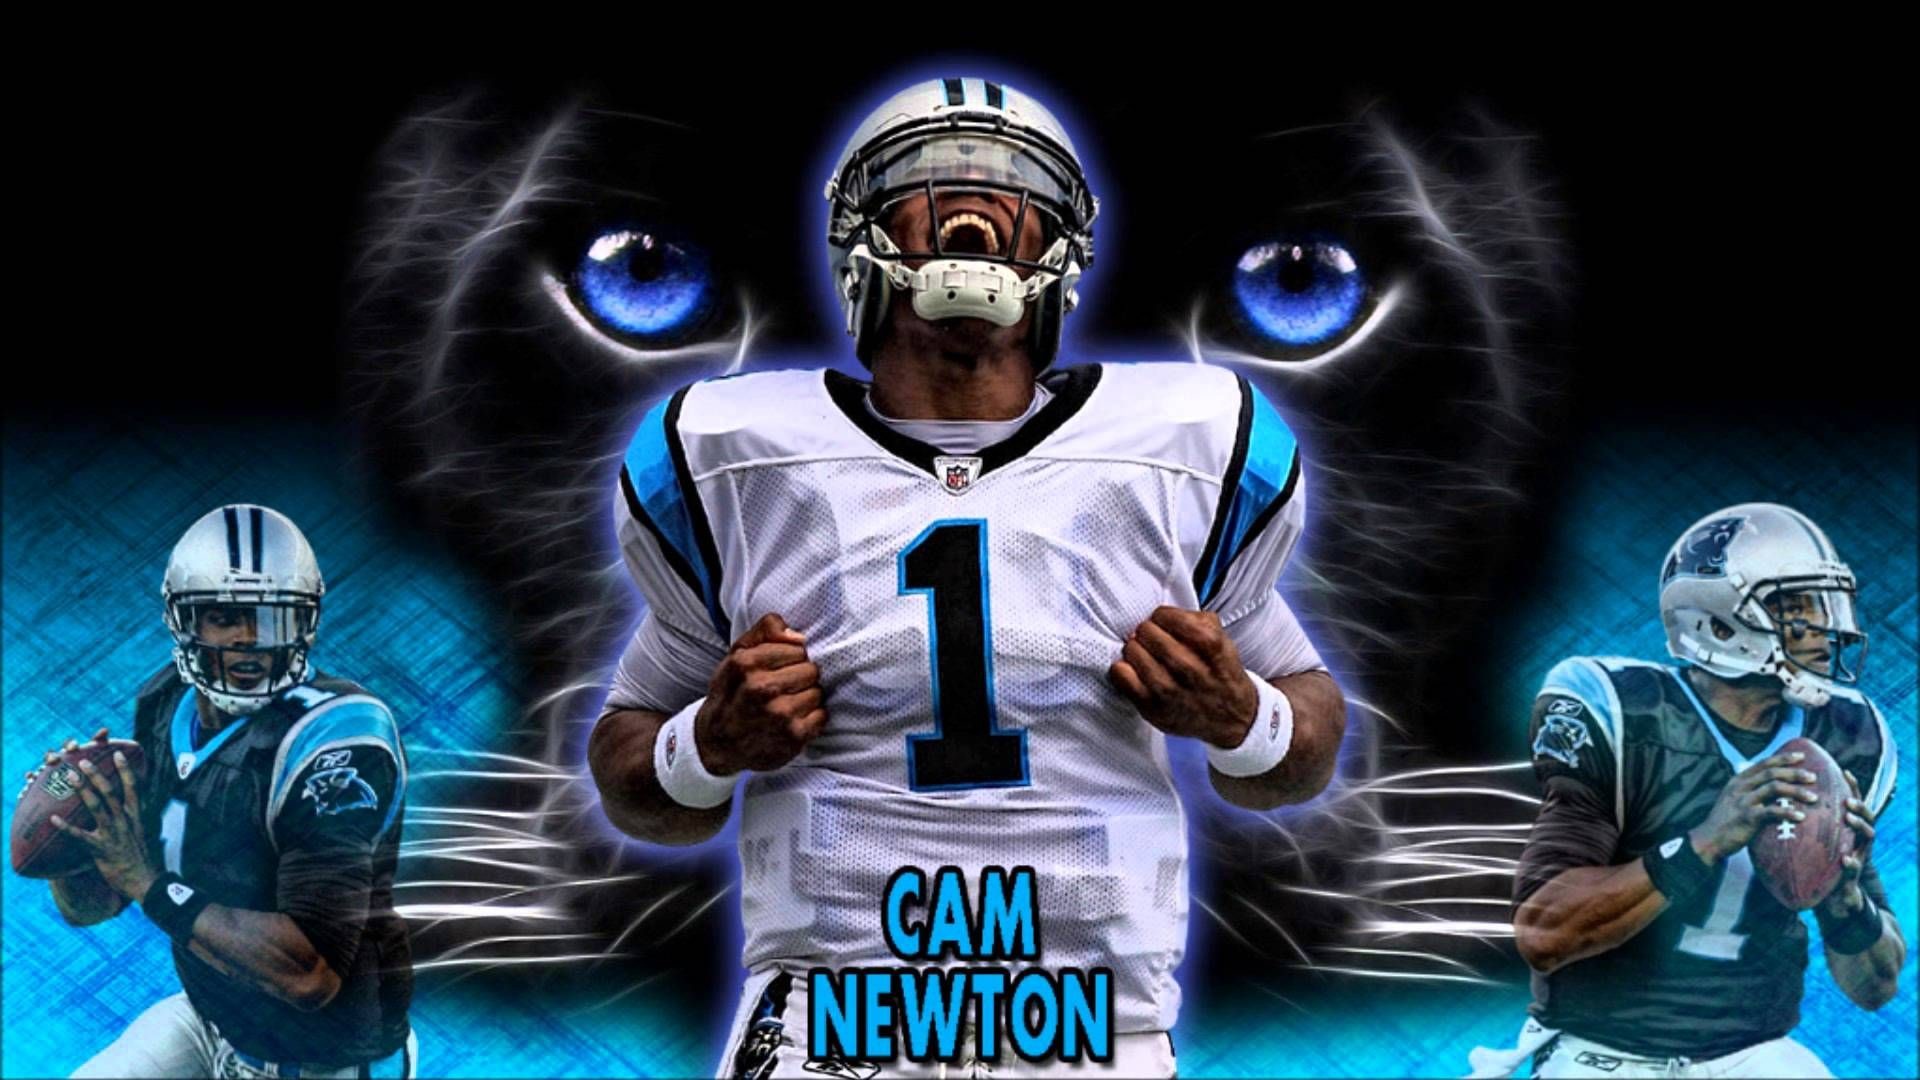 1920x1080 Related image Cam Newton Wallpaper, Nfl Jerseys, American Football, Carolina  Panthers Game,